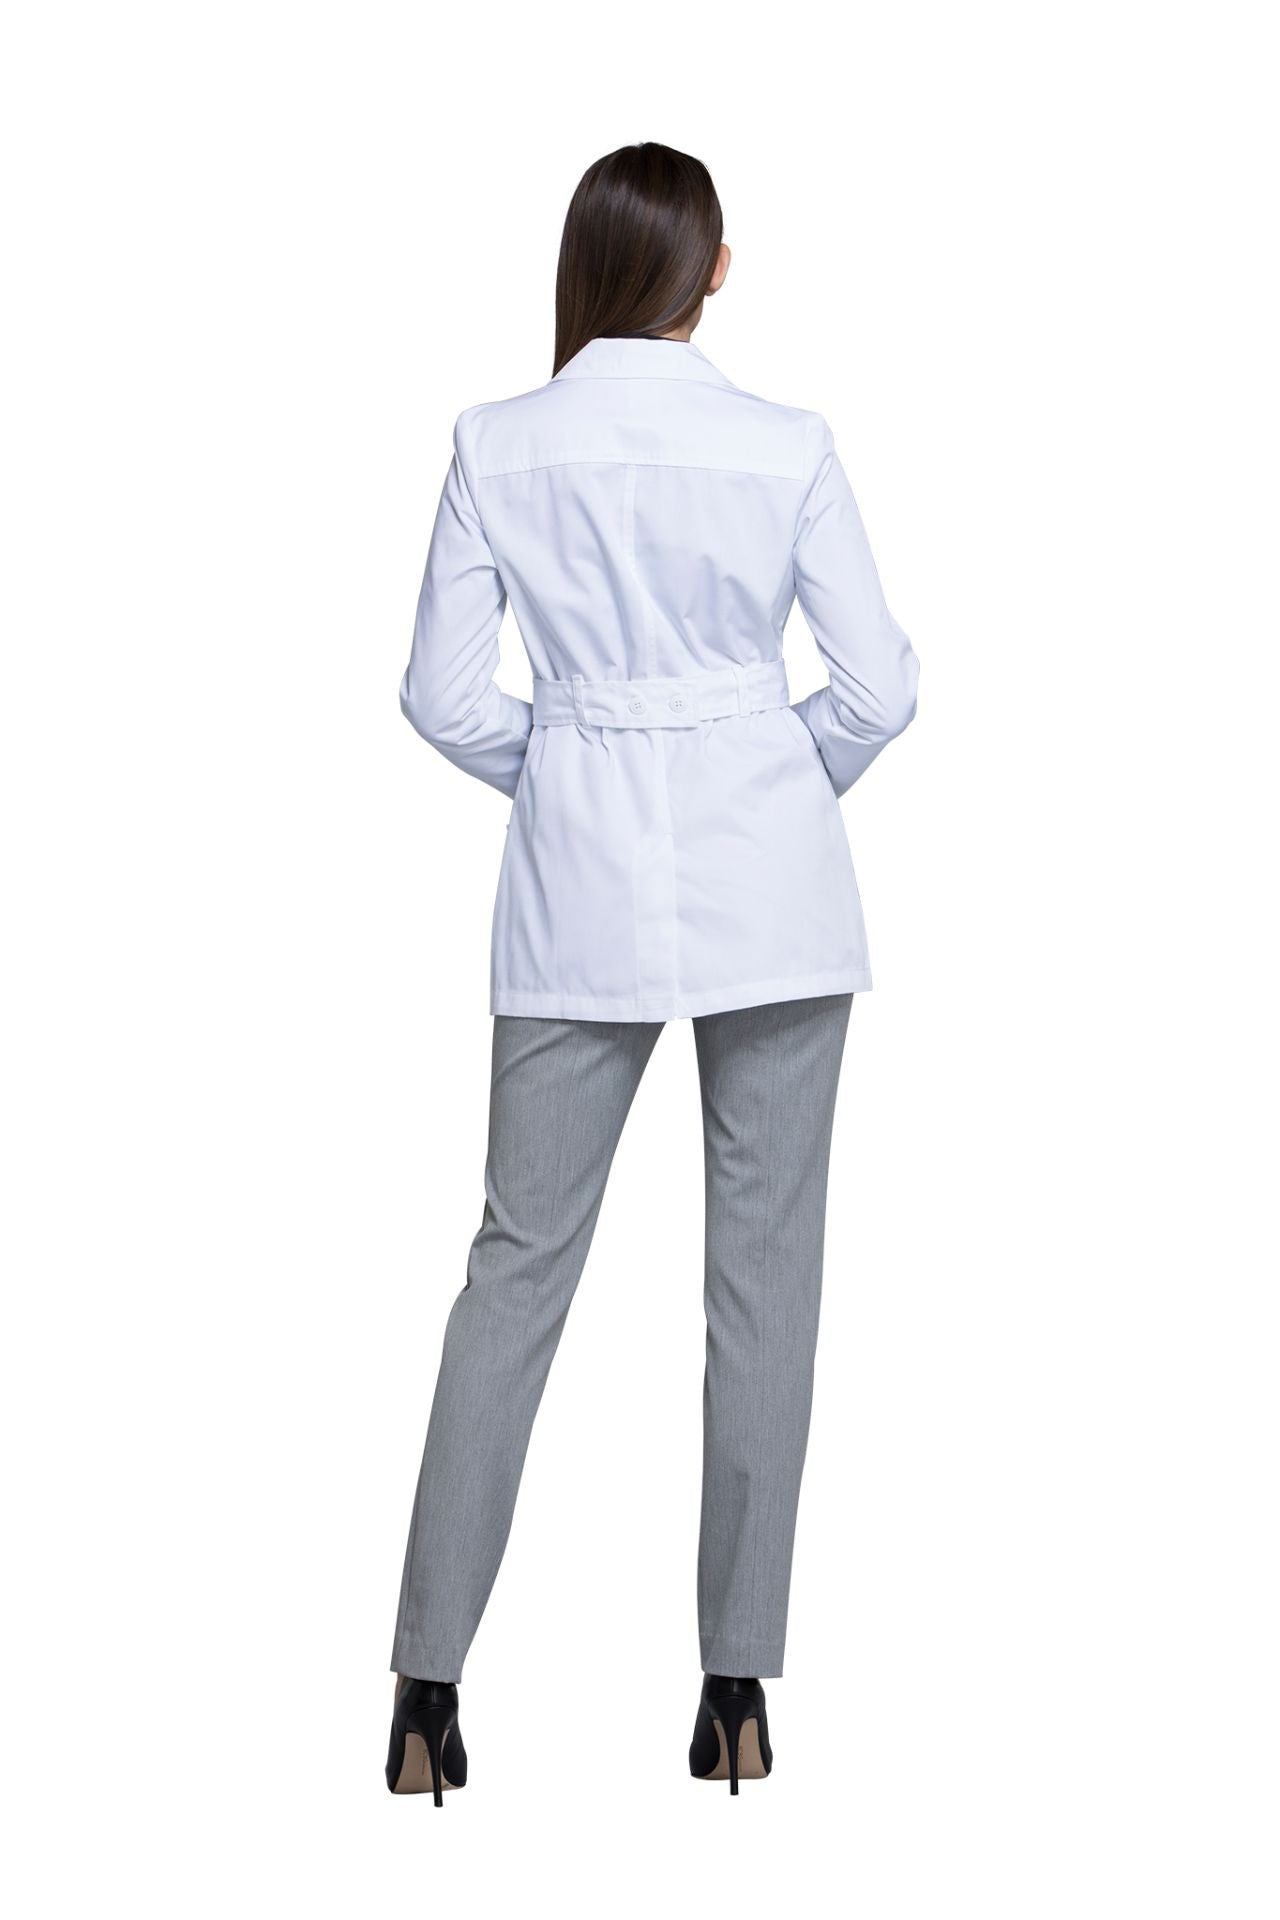 White - Cherokee Lab Coats 30" Women's Lab Coat